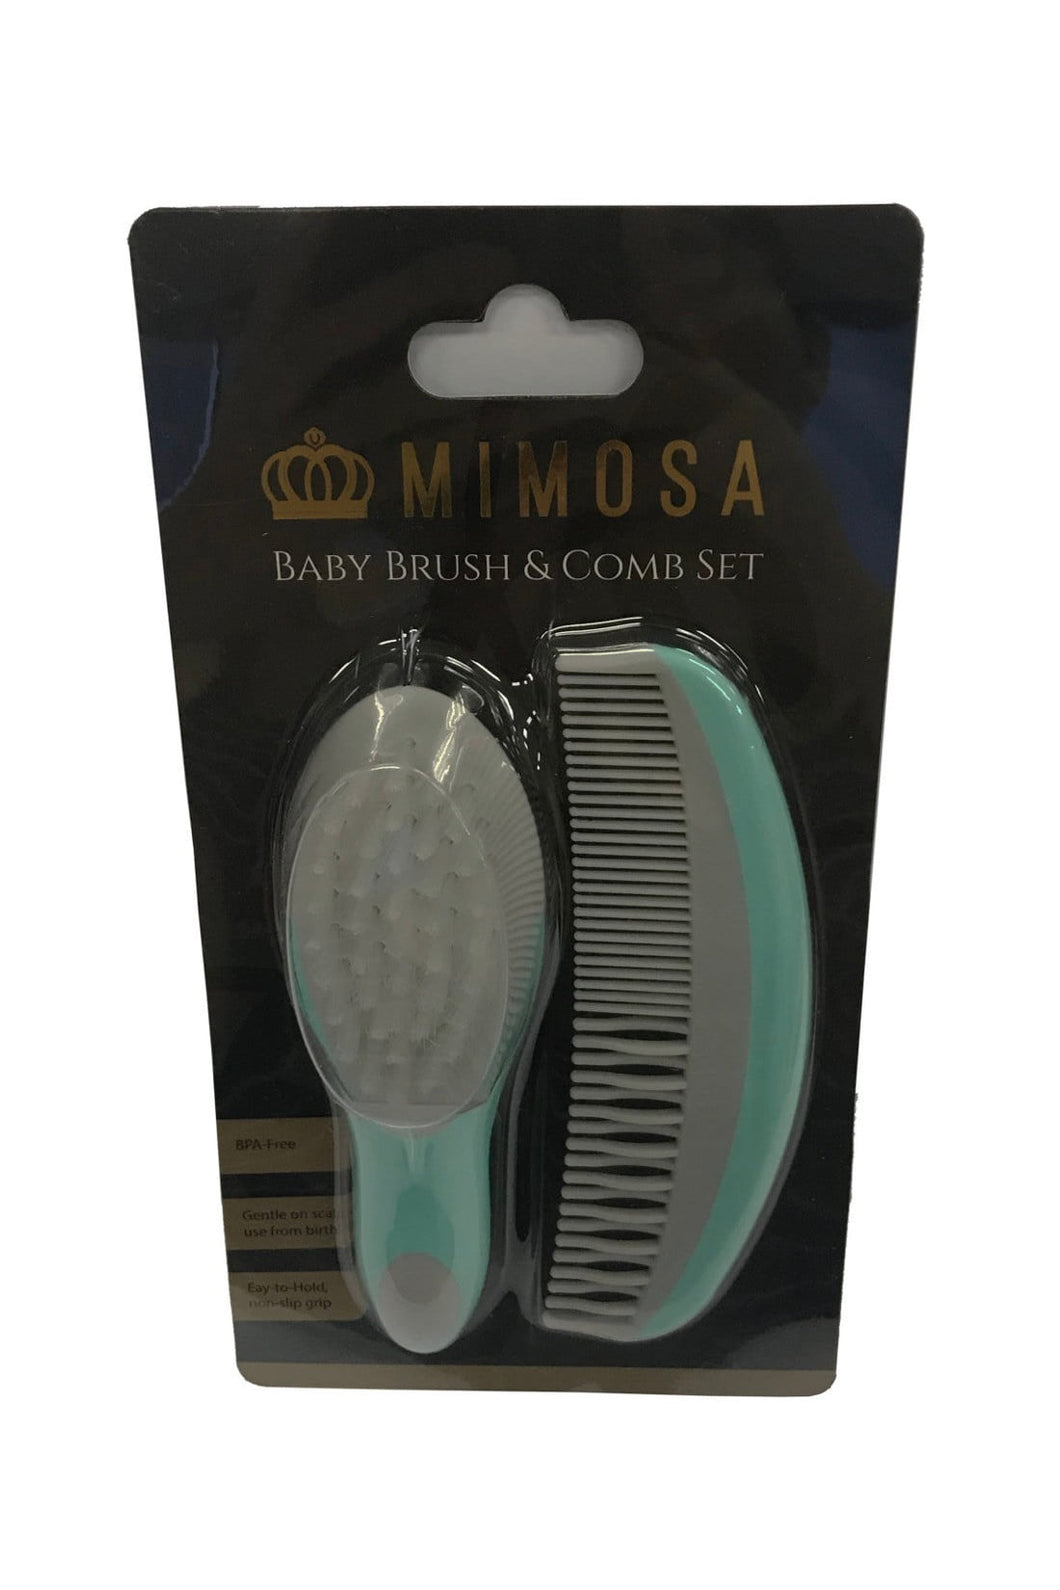 Mimosa Baby Brush Comb Set